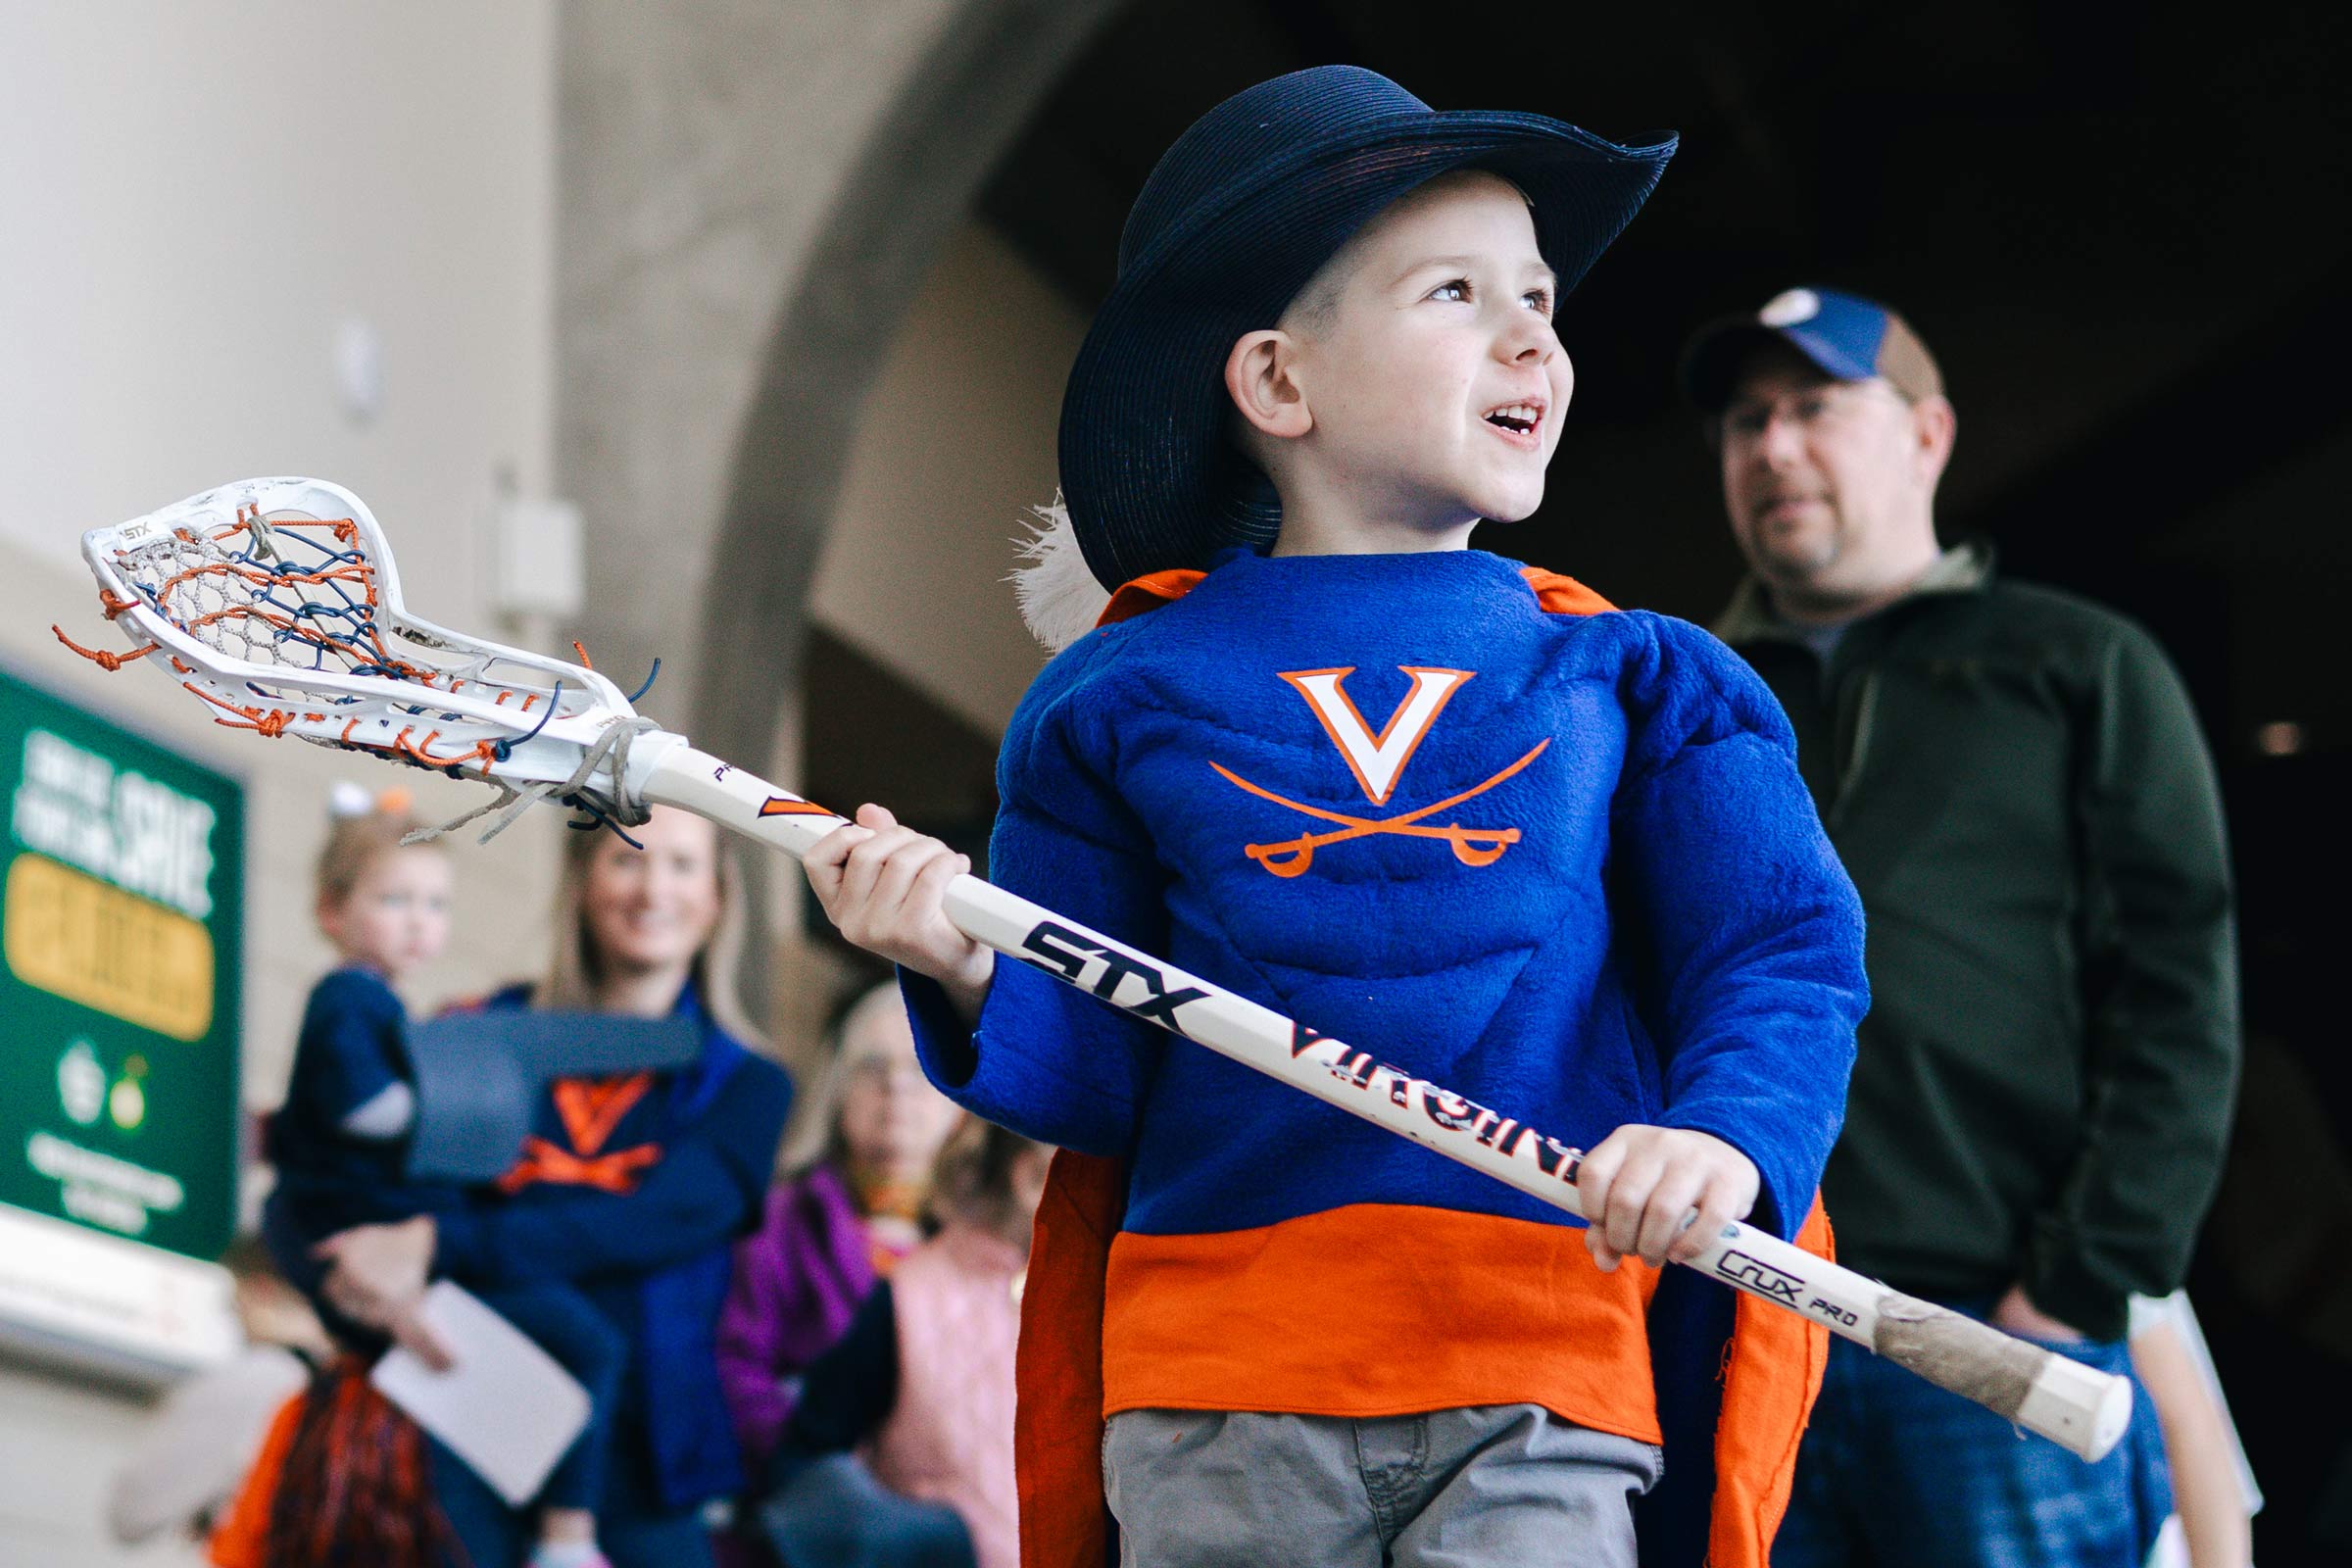 A little boy dressed as Cavman cradles a lacrosse stick